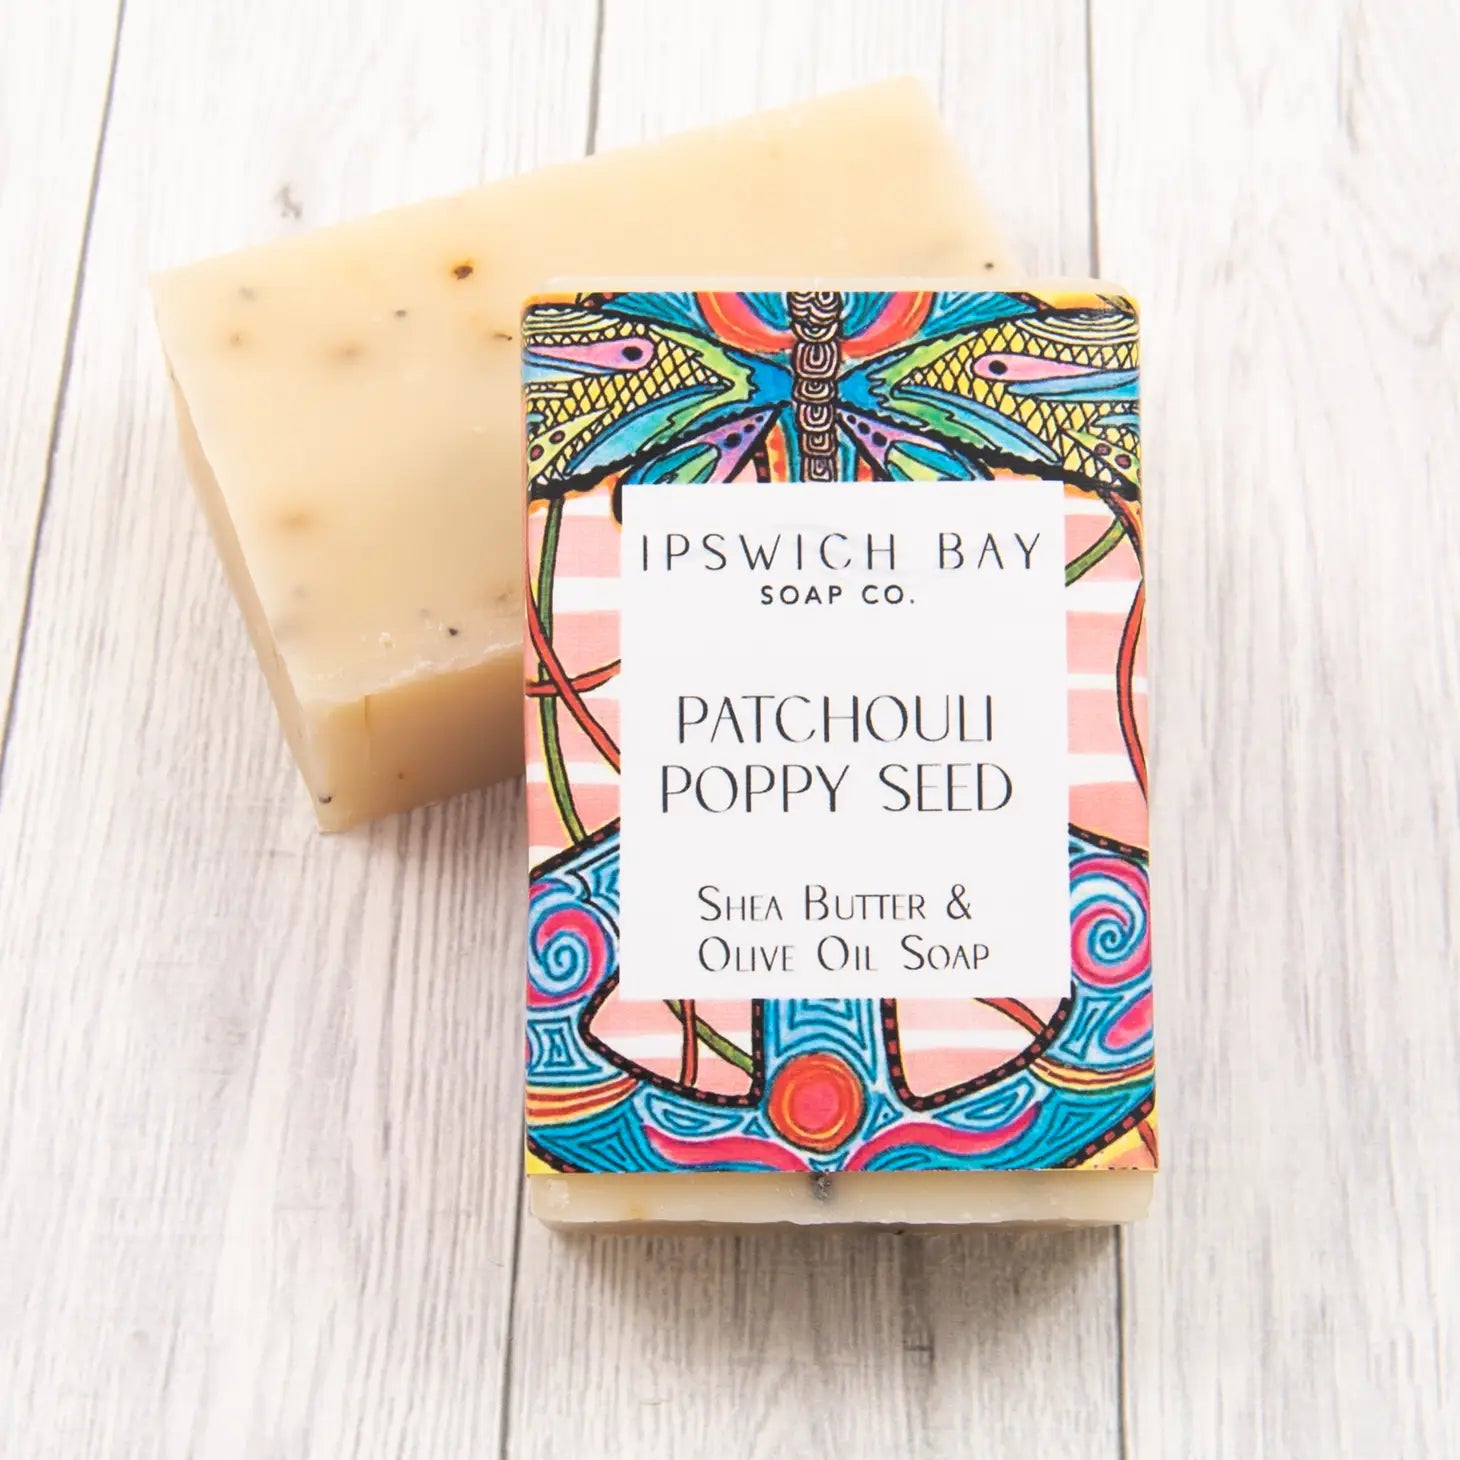 Patchouli Poppy Seed Soap